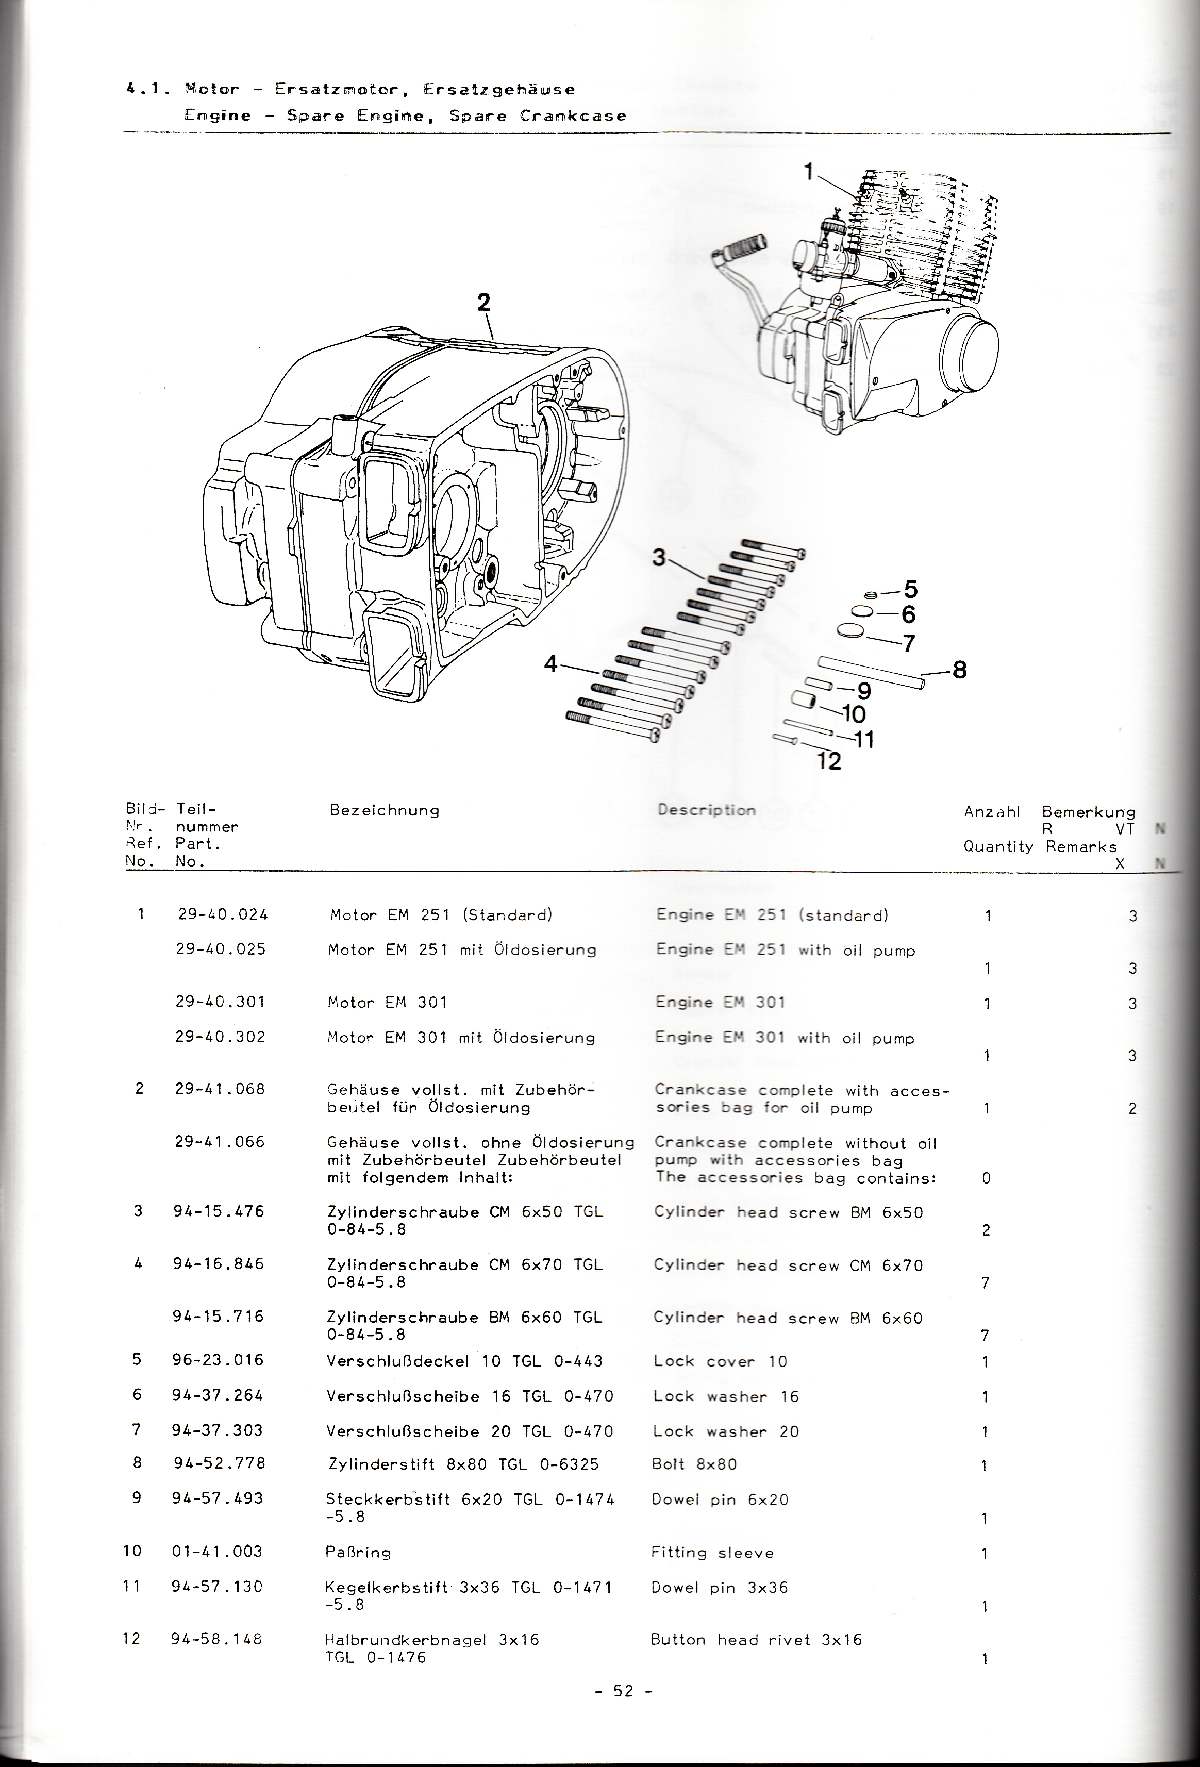 Katalog MZ 251 ETZ - 4.1. Motor - Ersatzmotor, Ersatzgehäuse 